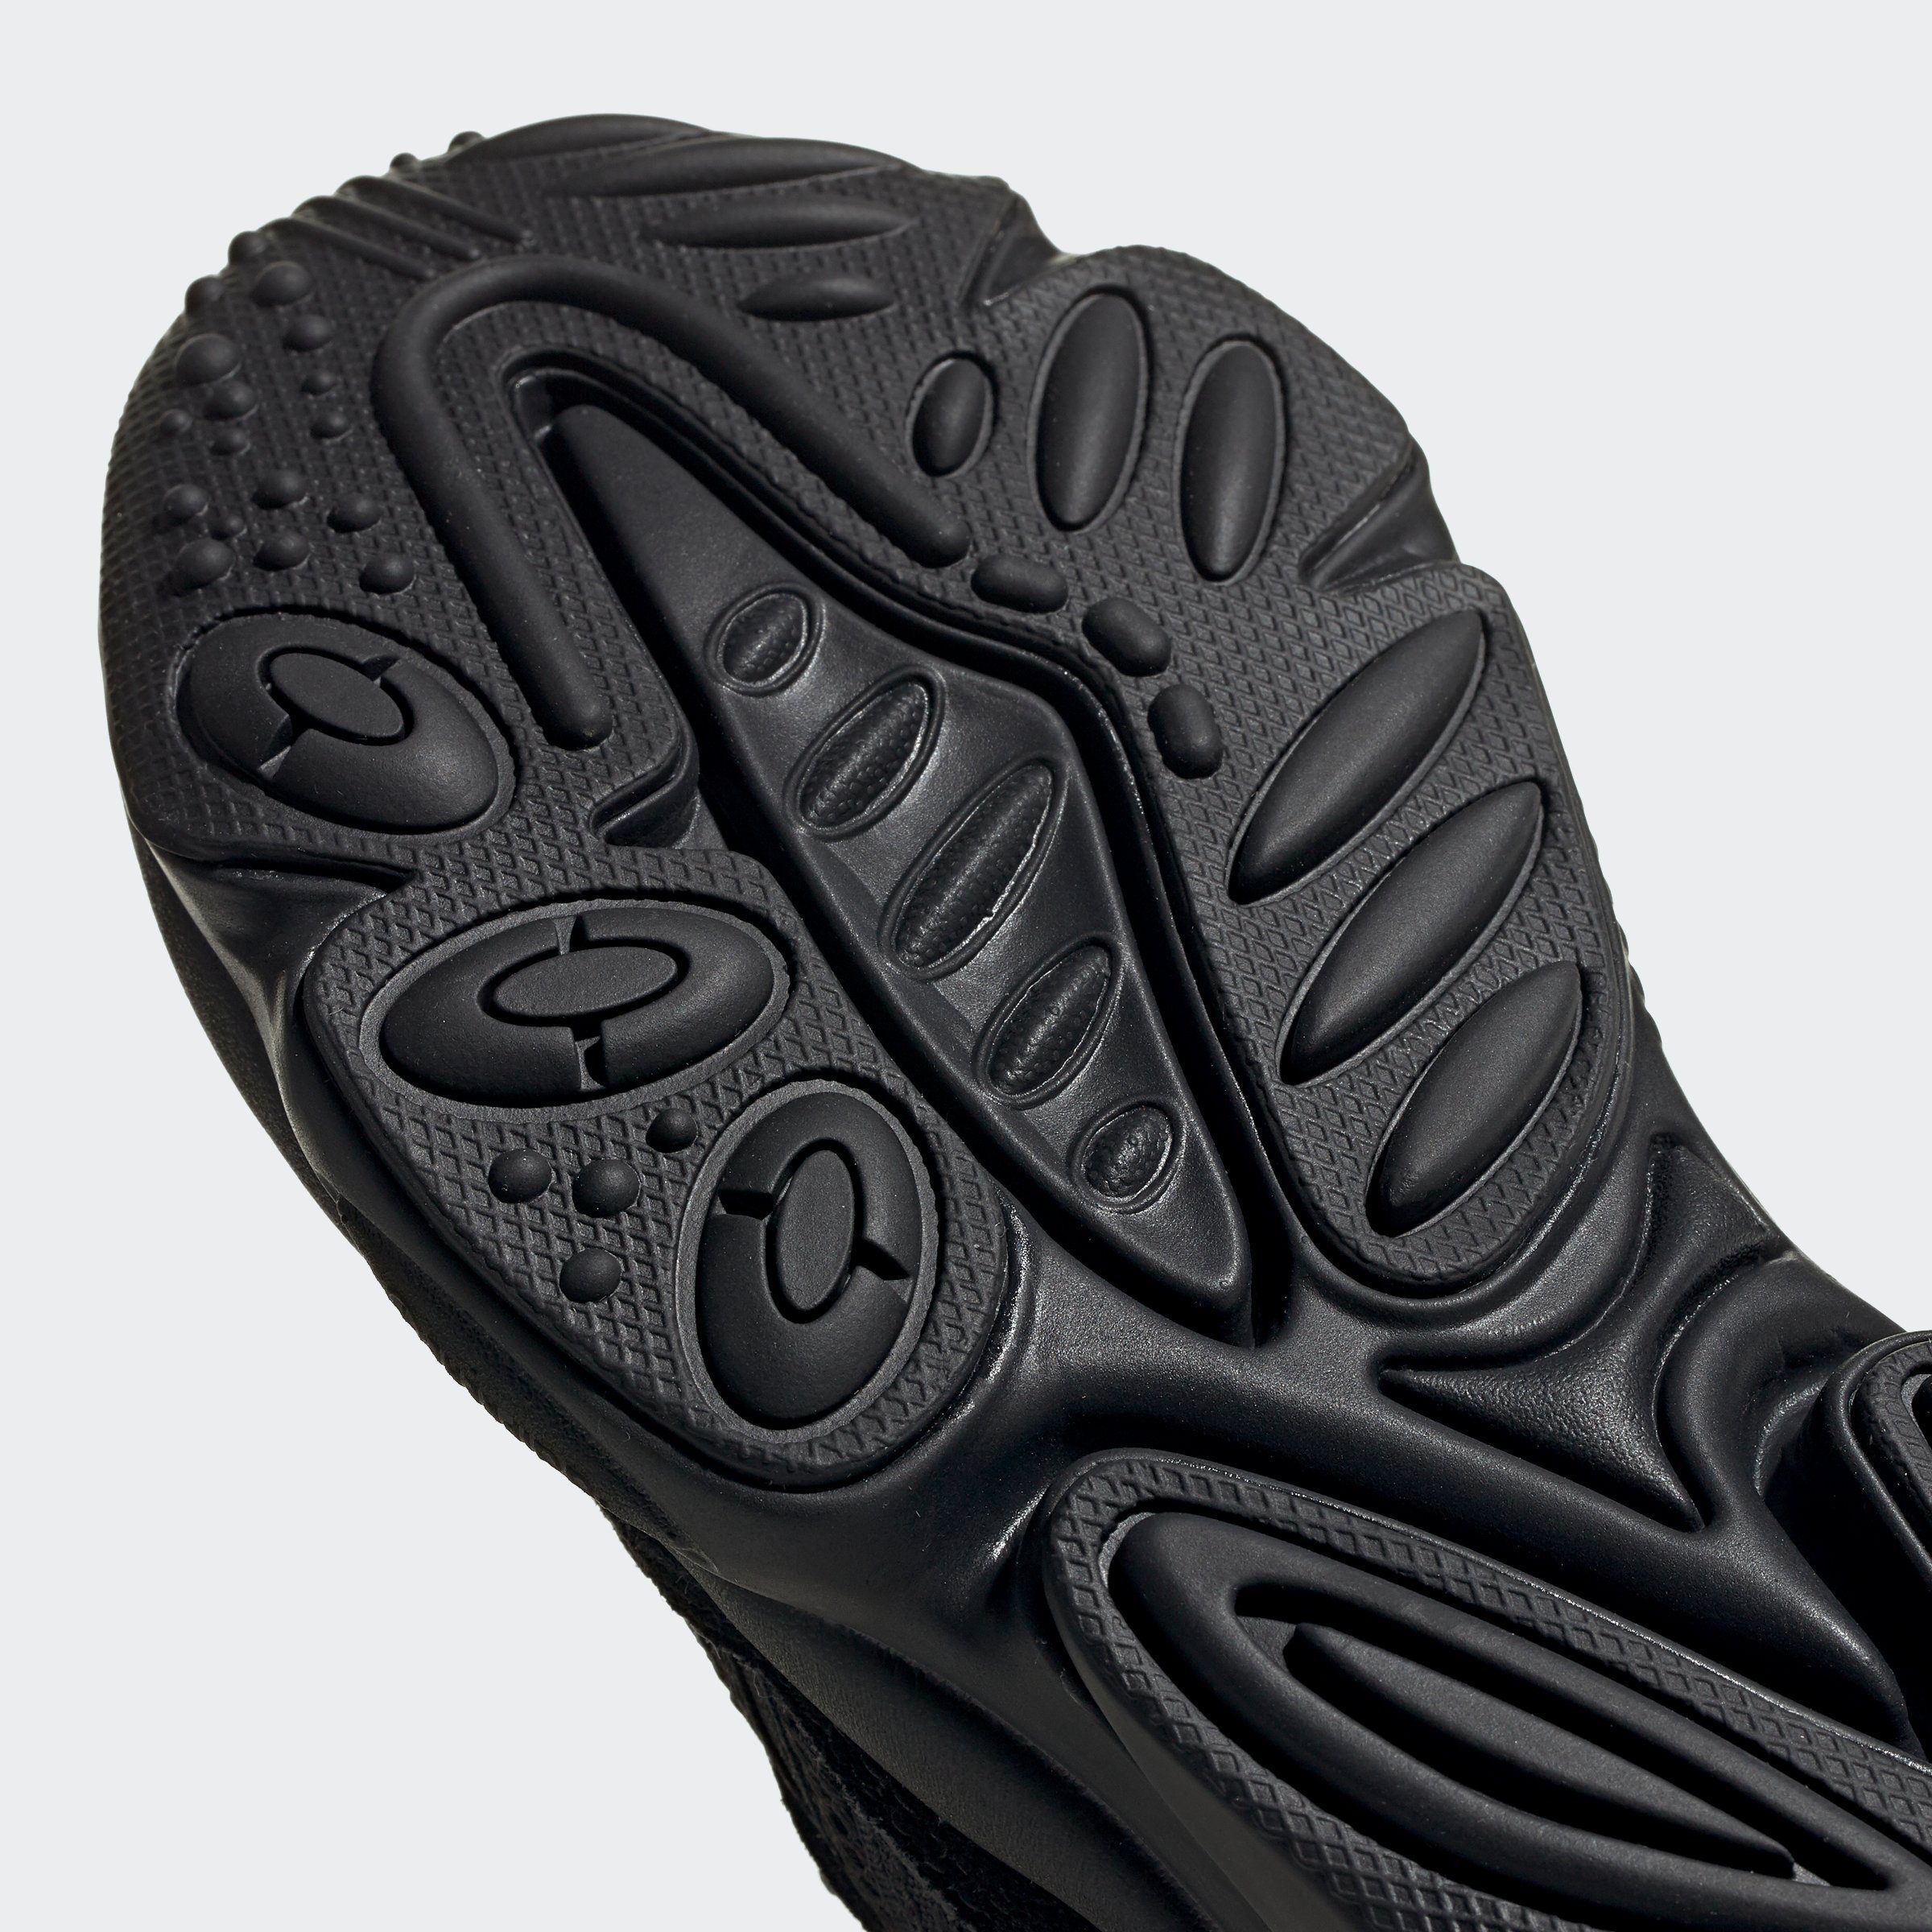 Trace Core Black Black / Metallic Originals Core OZWEEGO Grey / Sneaker adidas